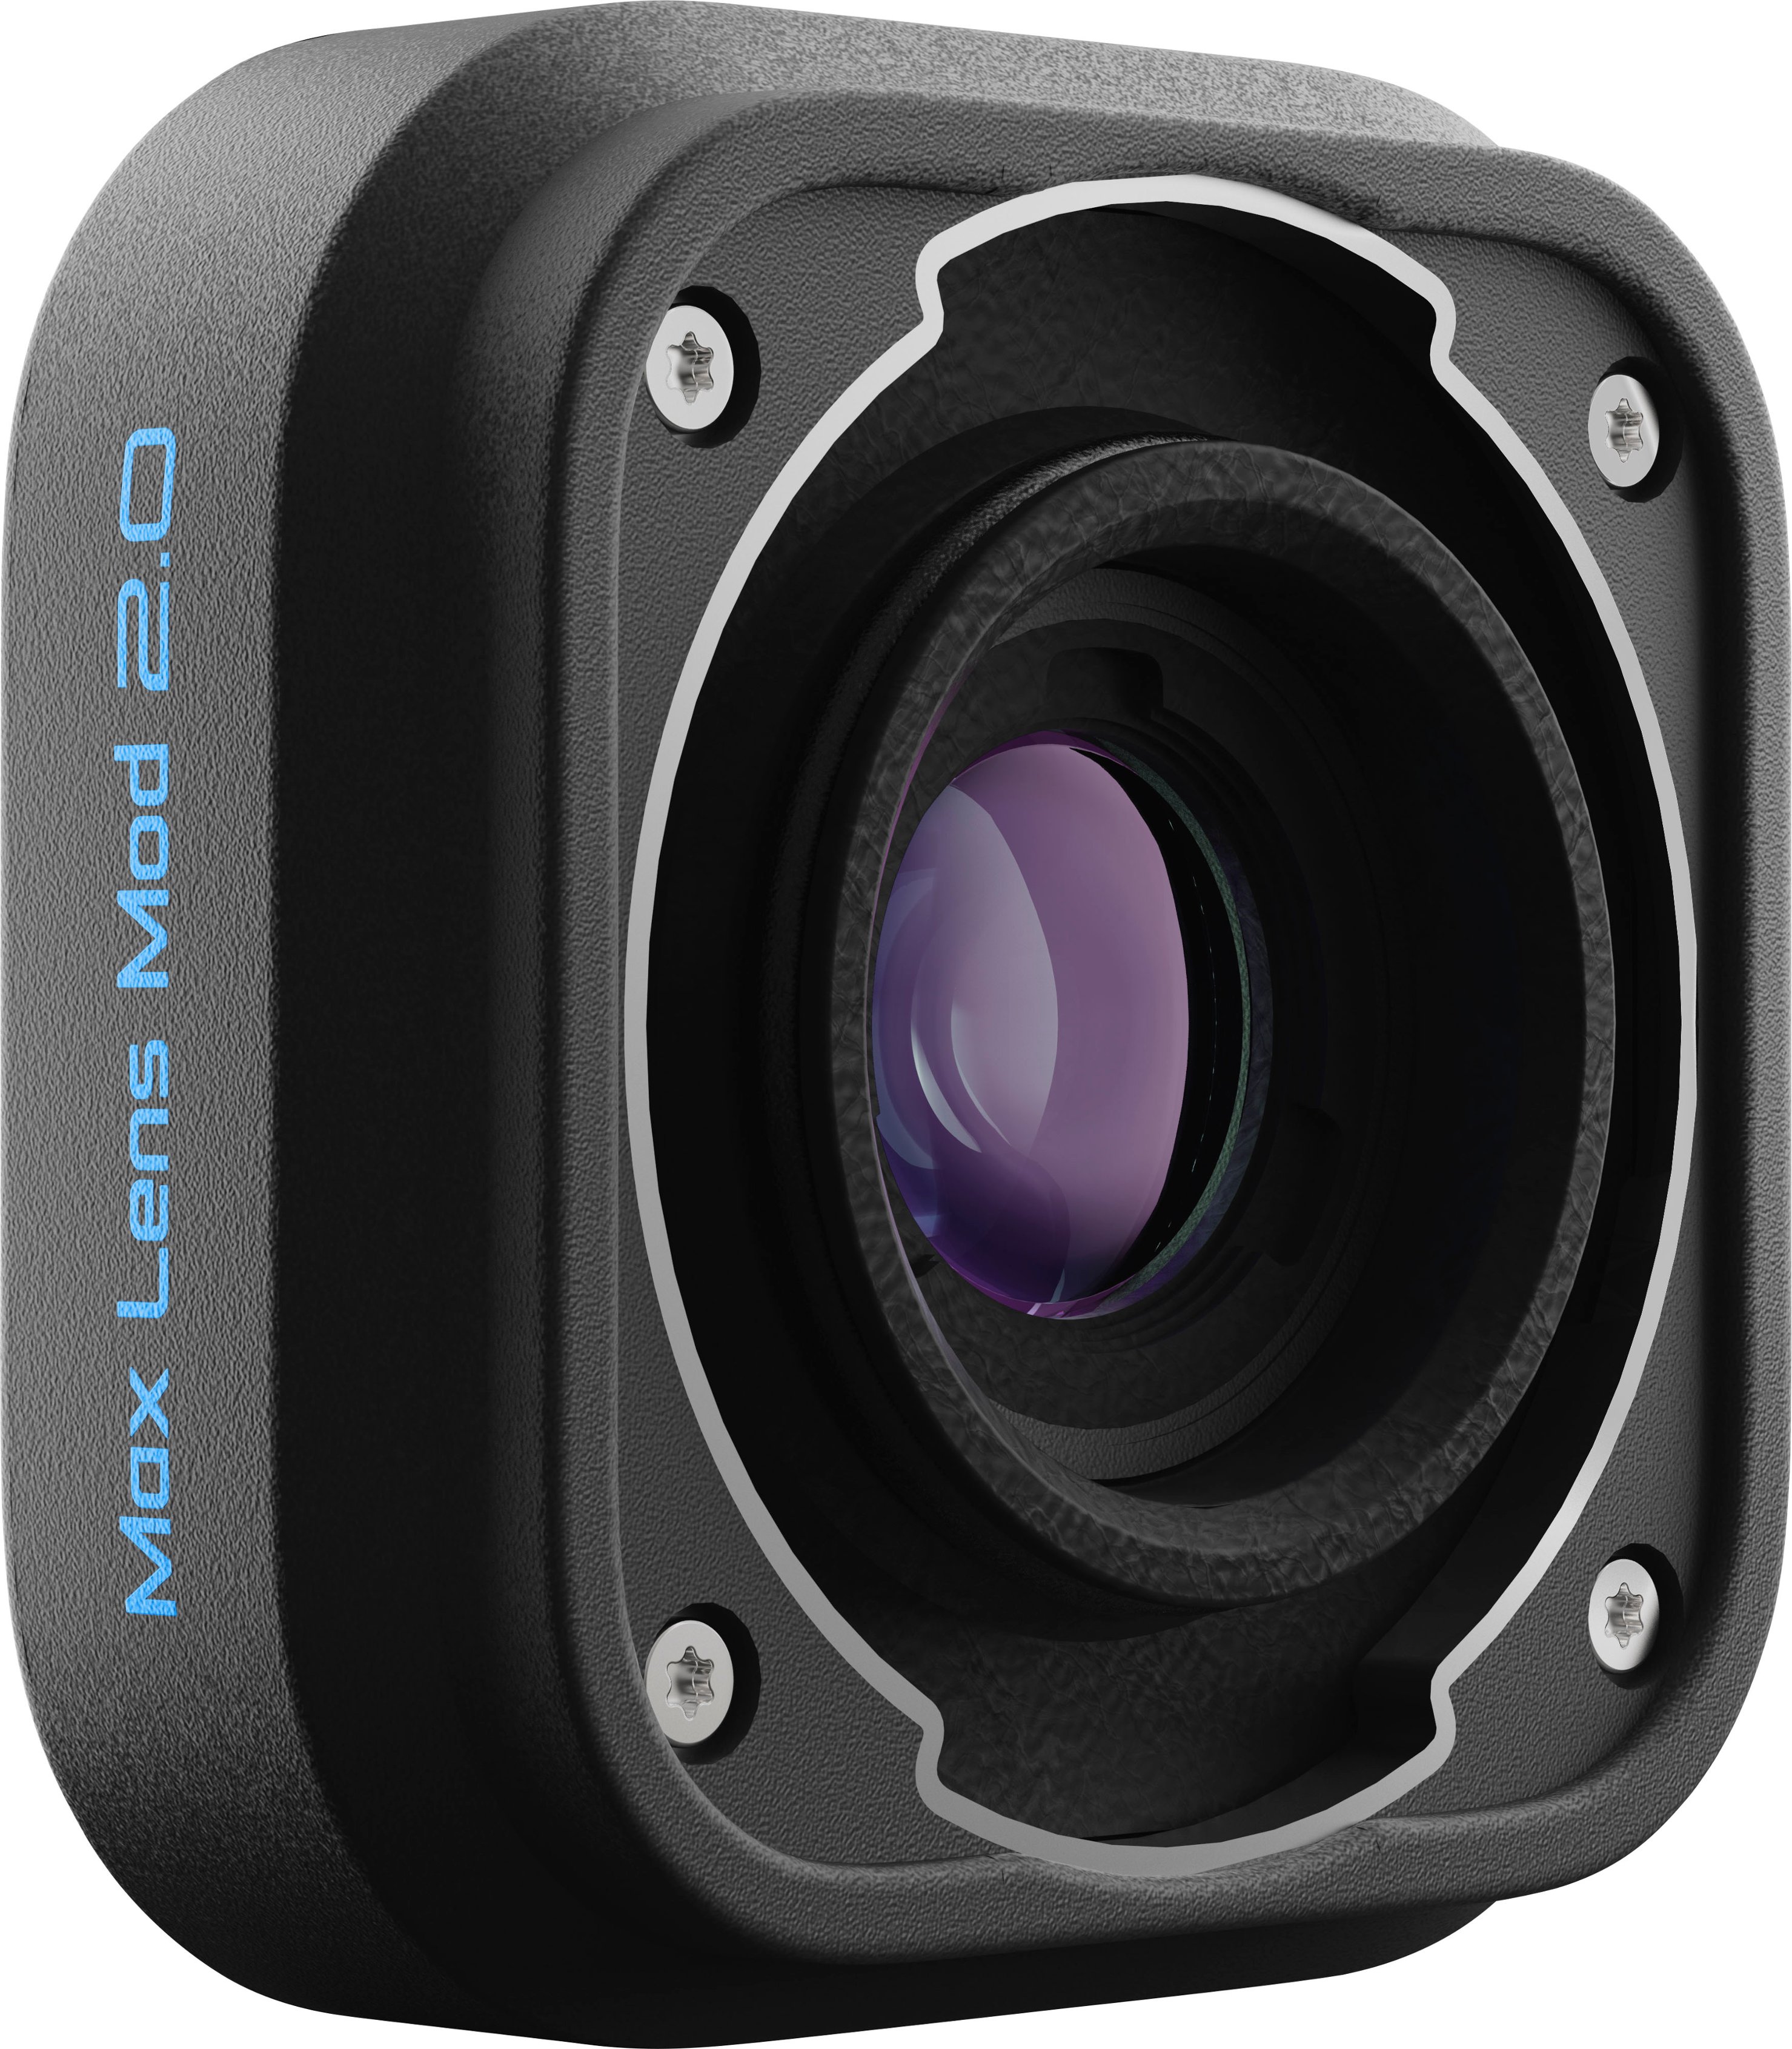 Max for Lens Black HERO12 Buy Best Mod - ADWAL-002 GoPro 2.0